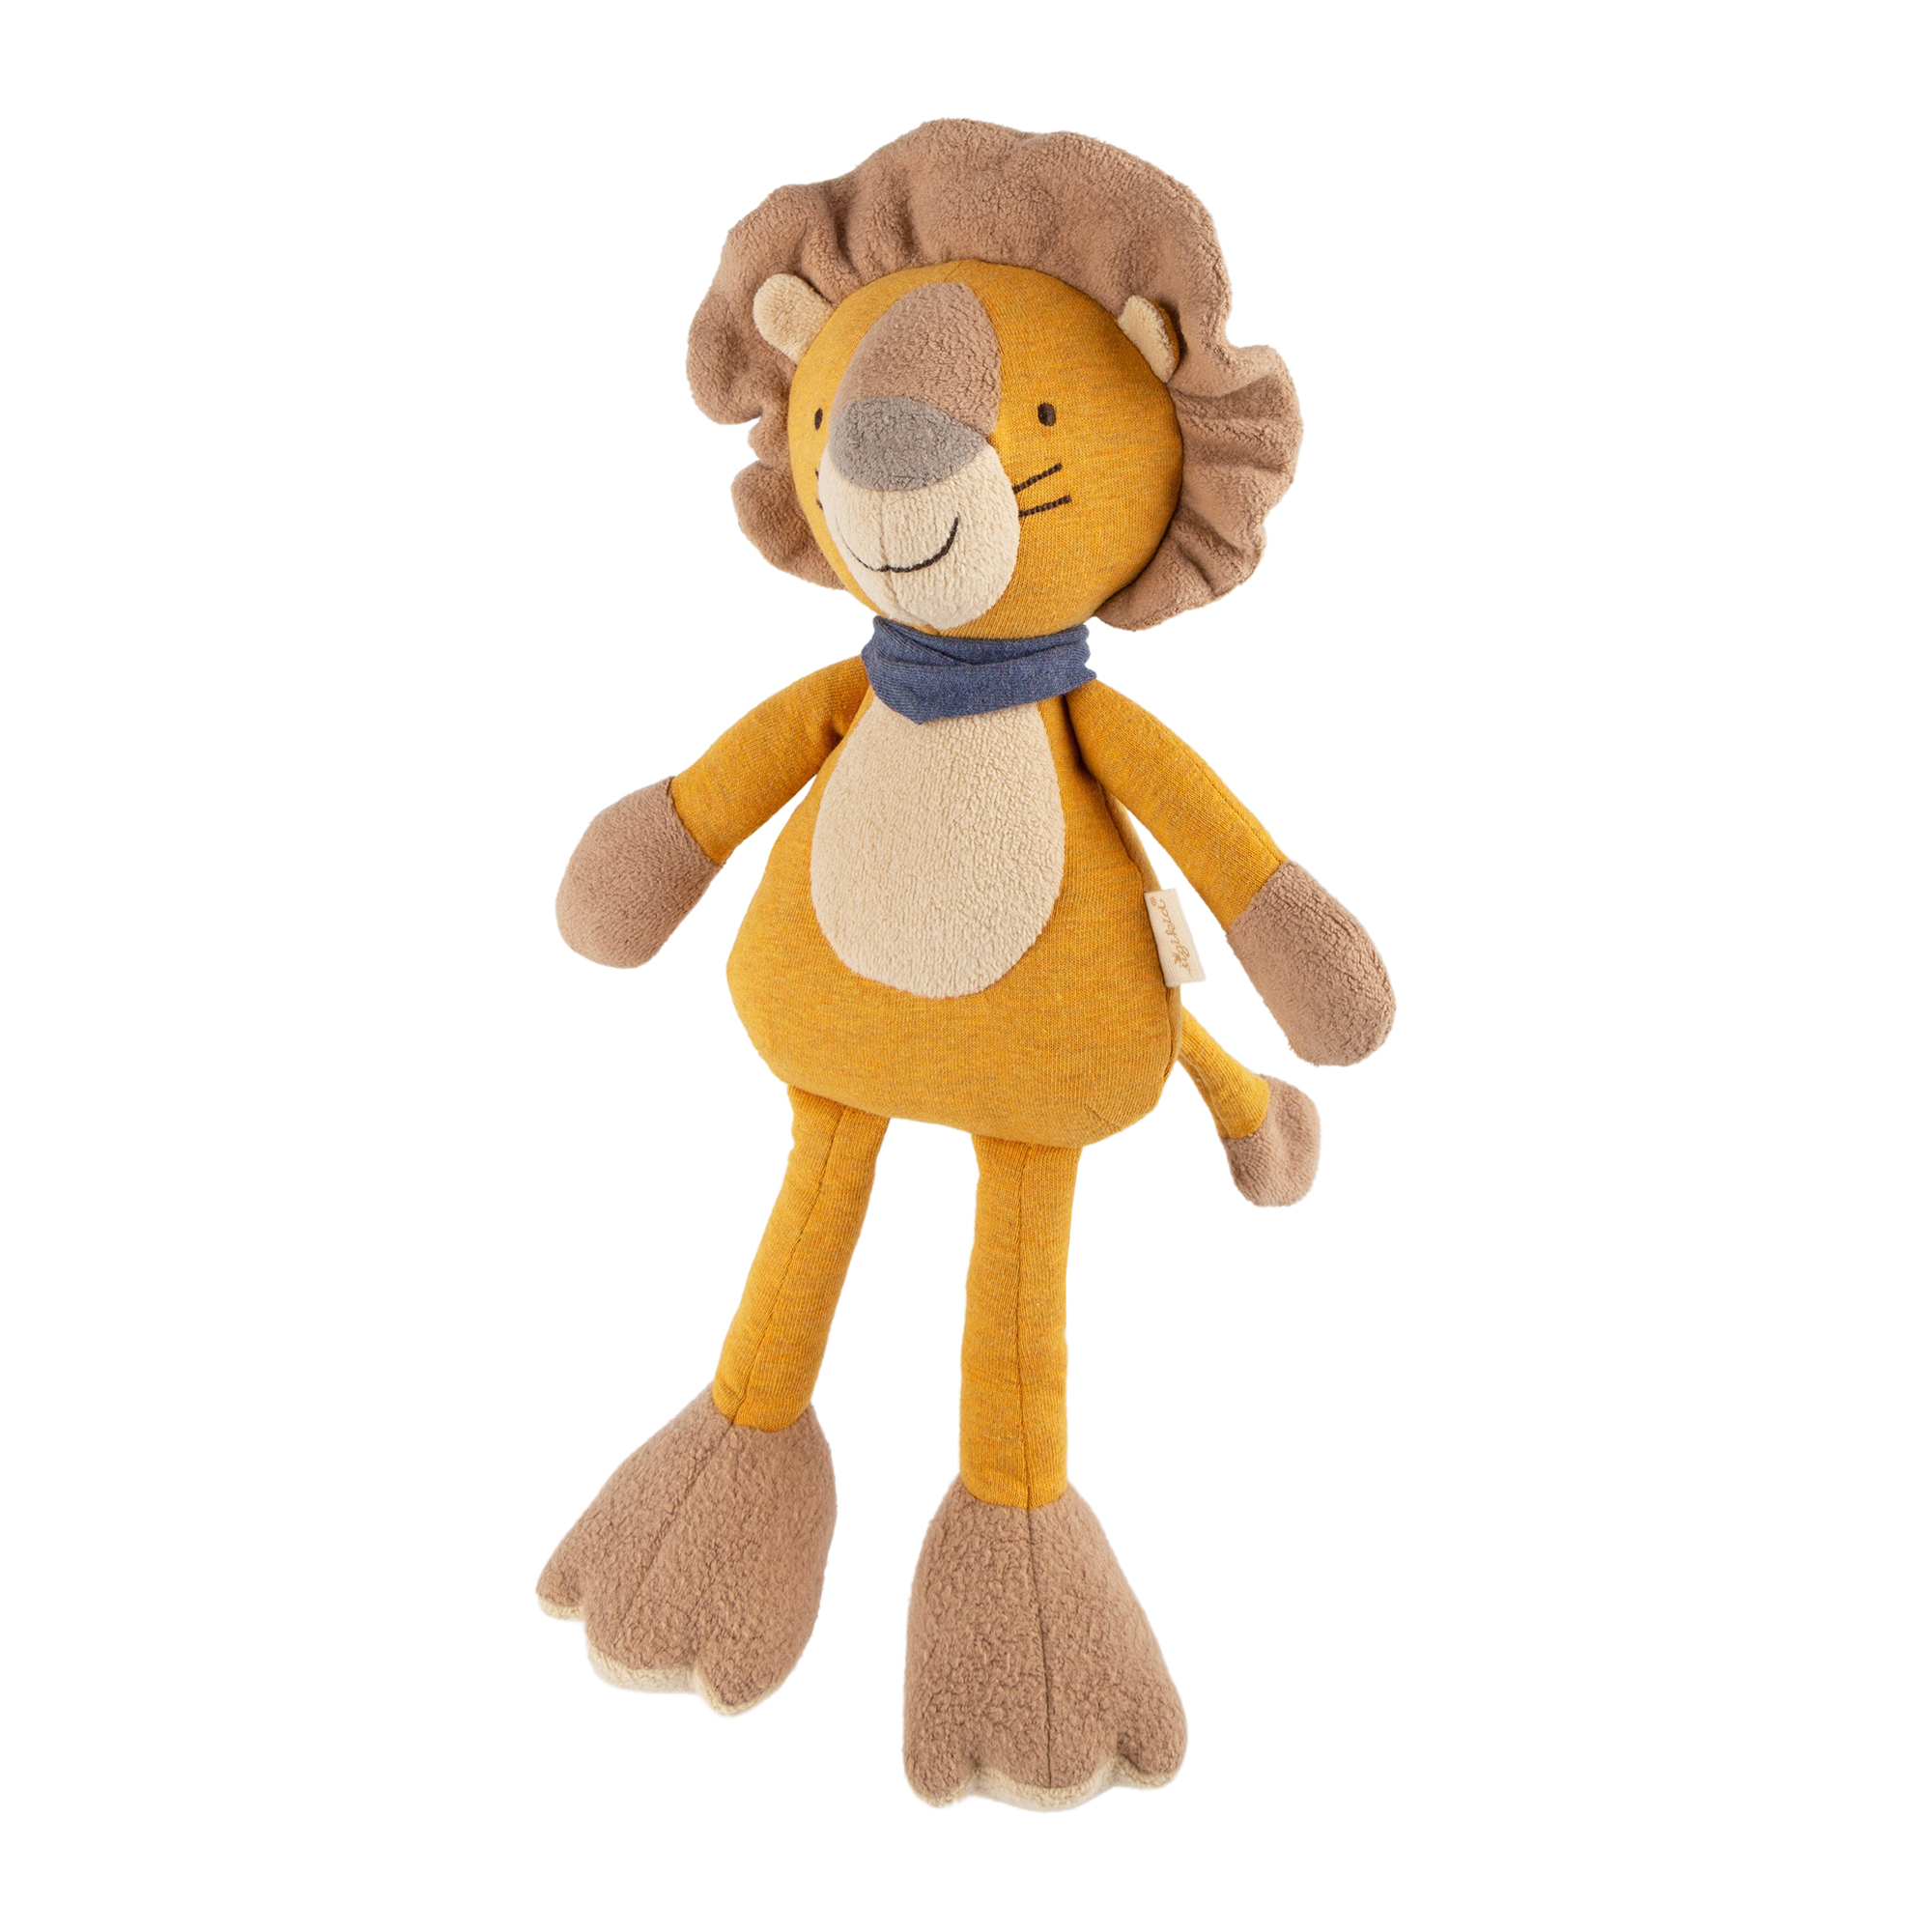 Soft toy lion